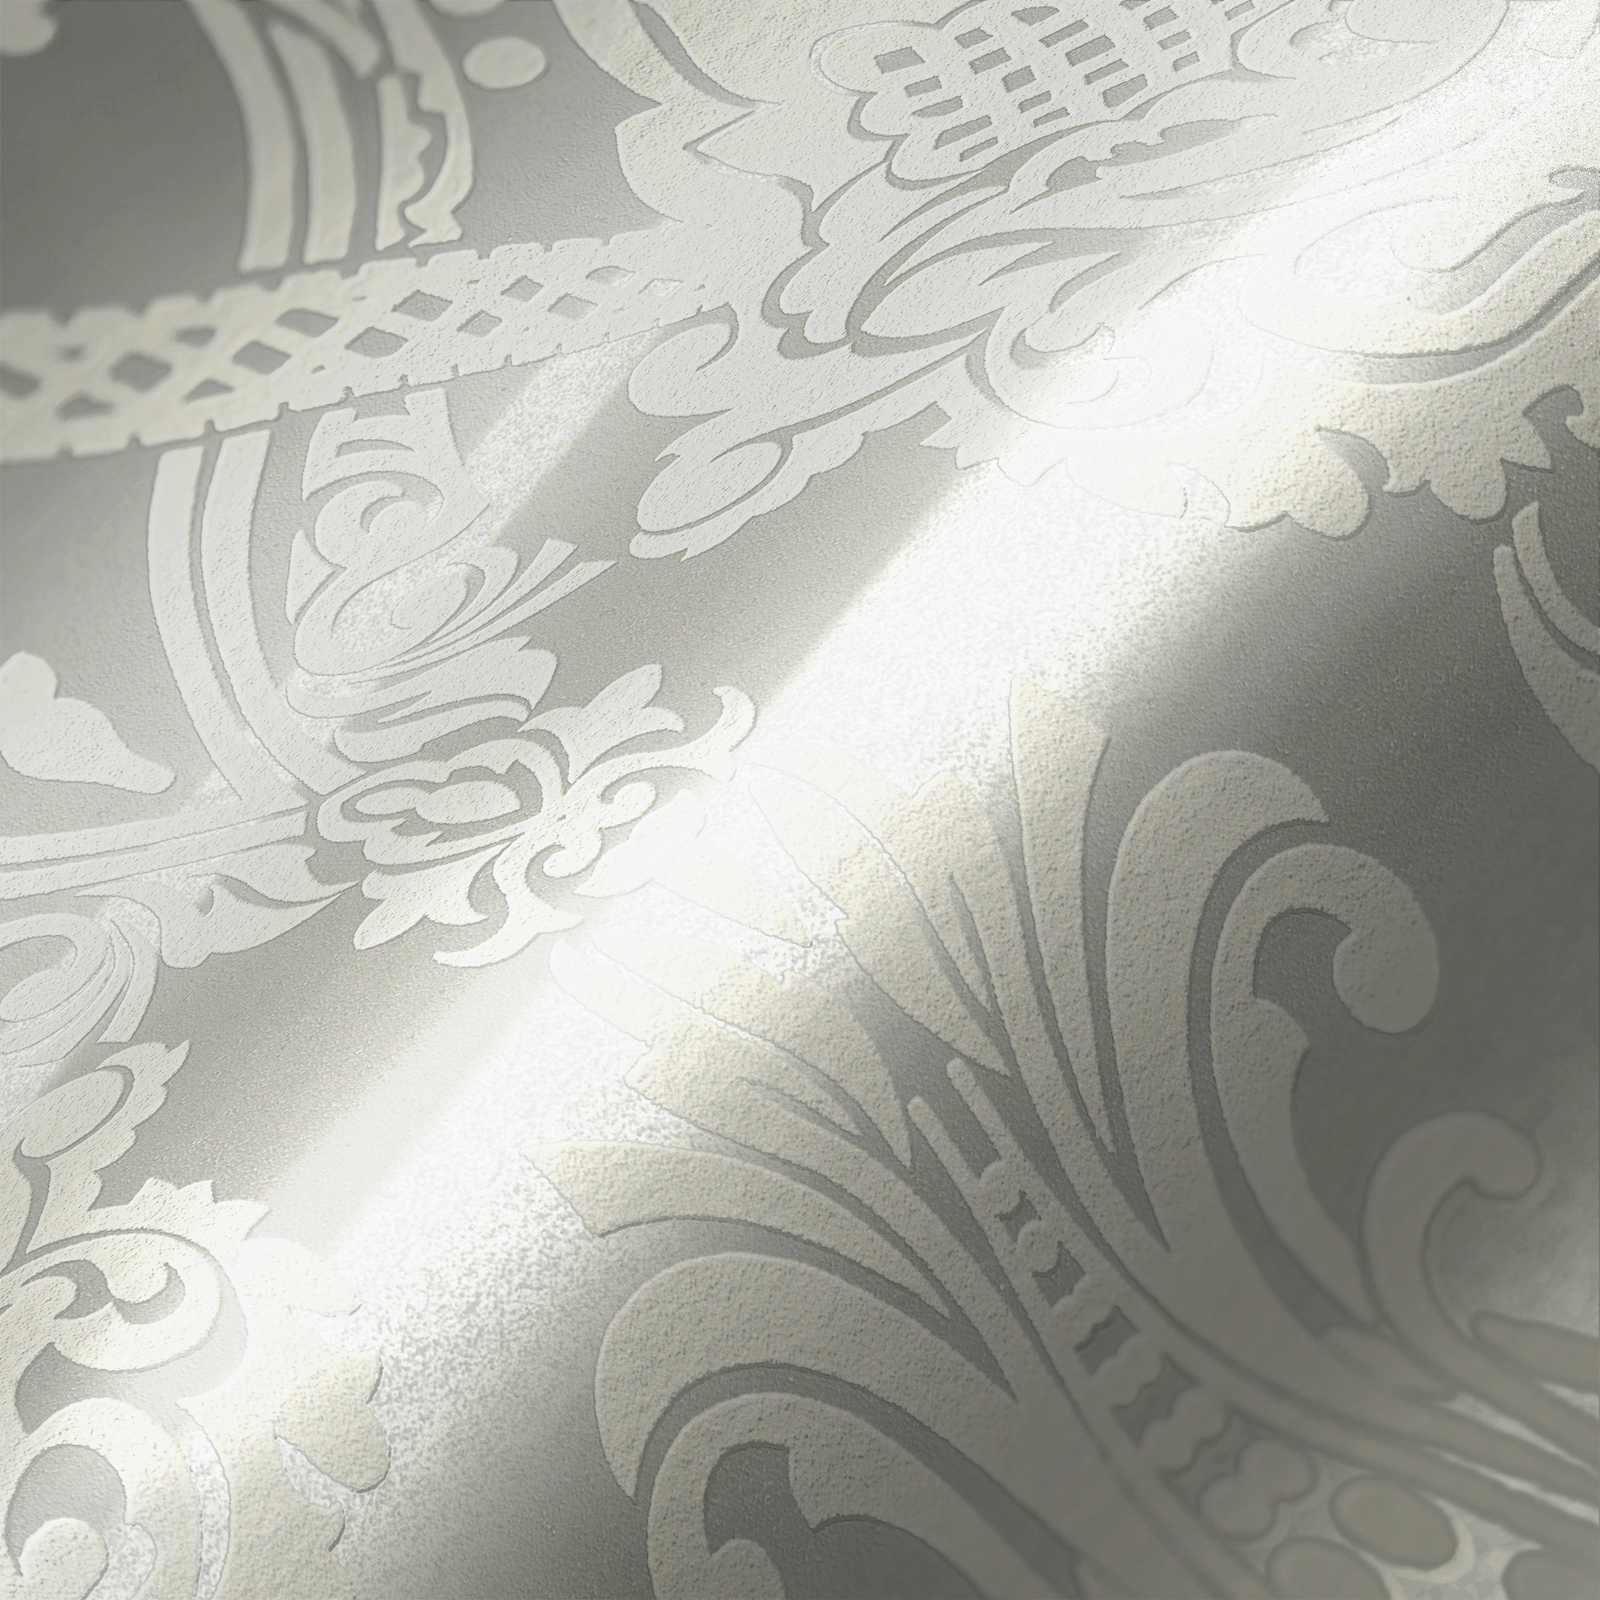             White wallpaper baroque design with metallic effect
        